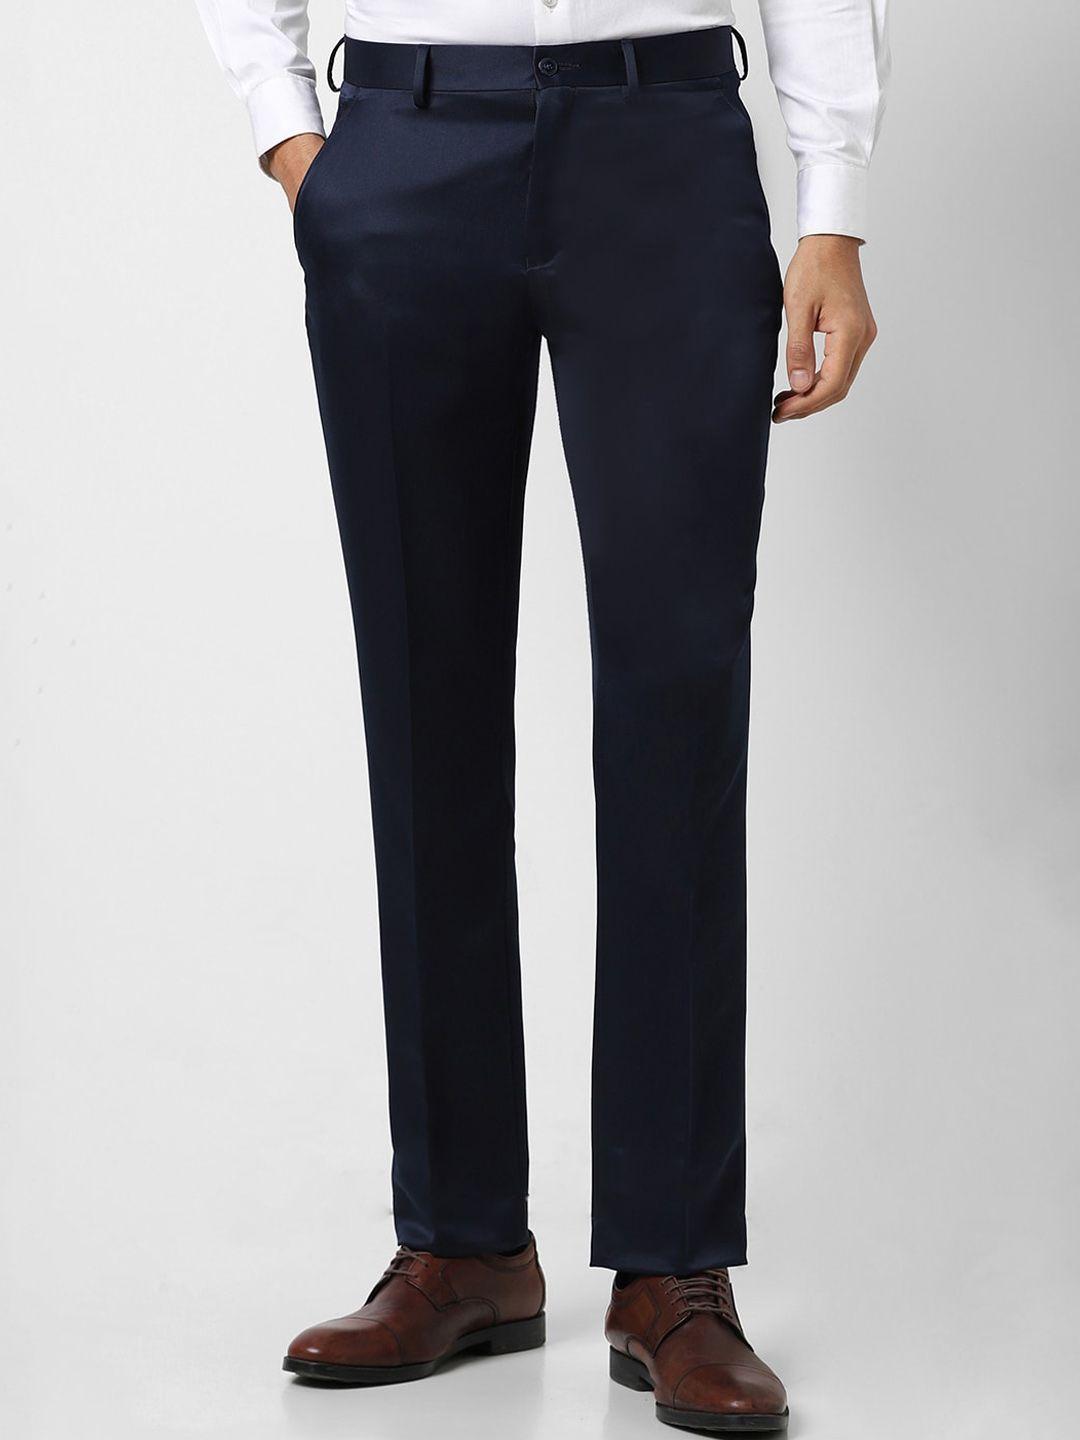 v-dot-men-mid-raise-clean-look-skinny-fit-trousers